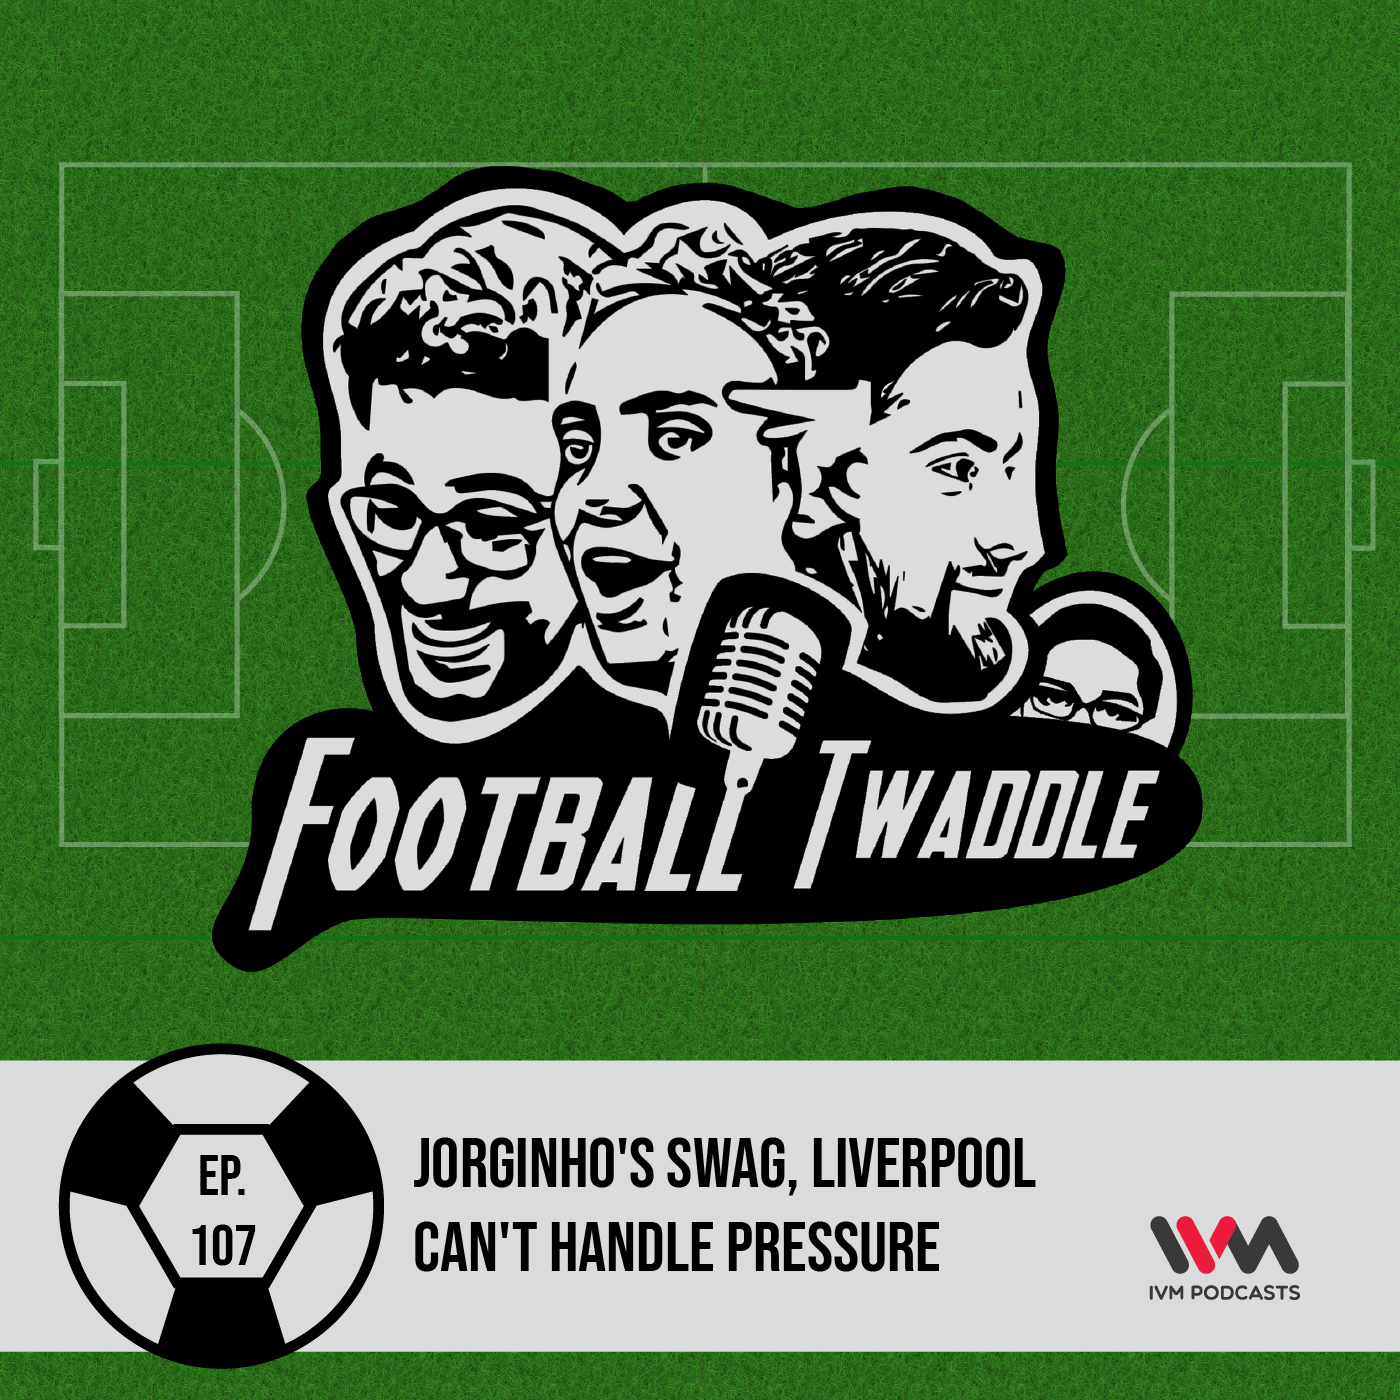 Jorginho's Swag, Liverpool can't handle pressure